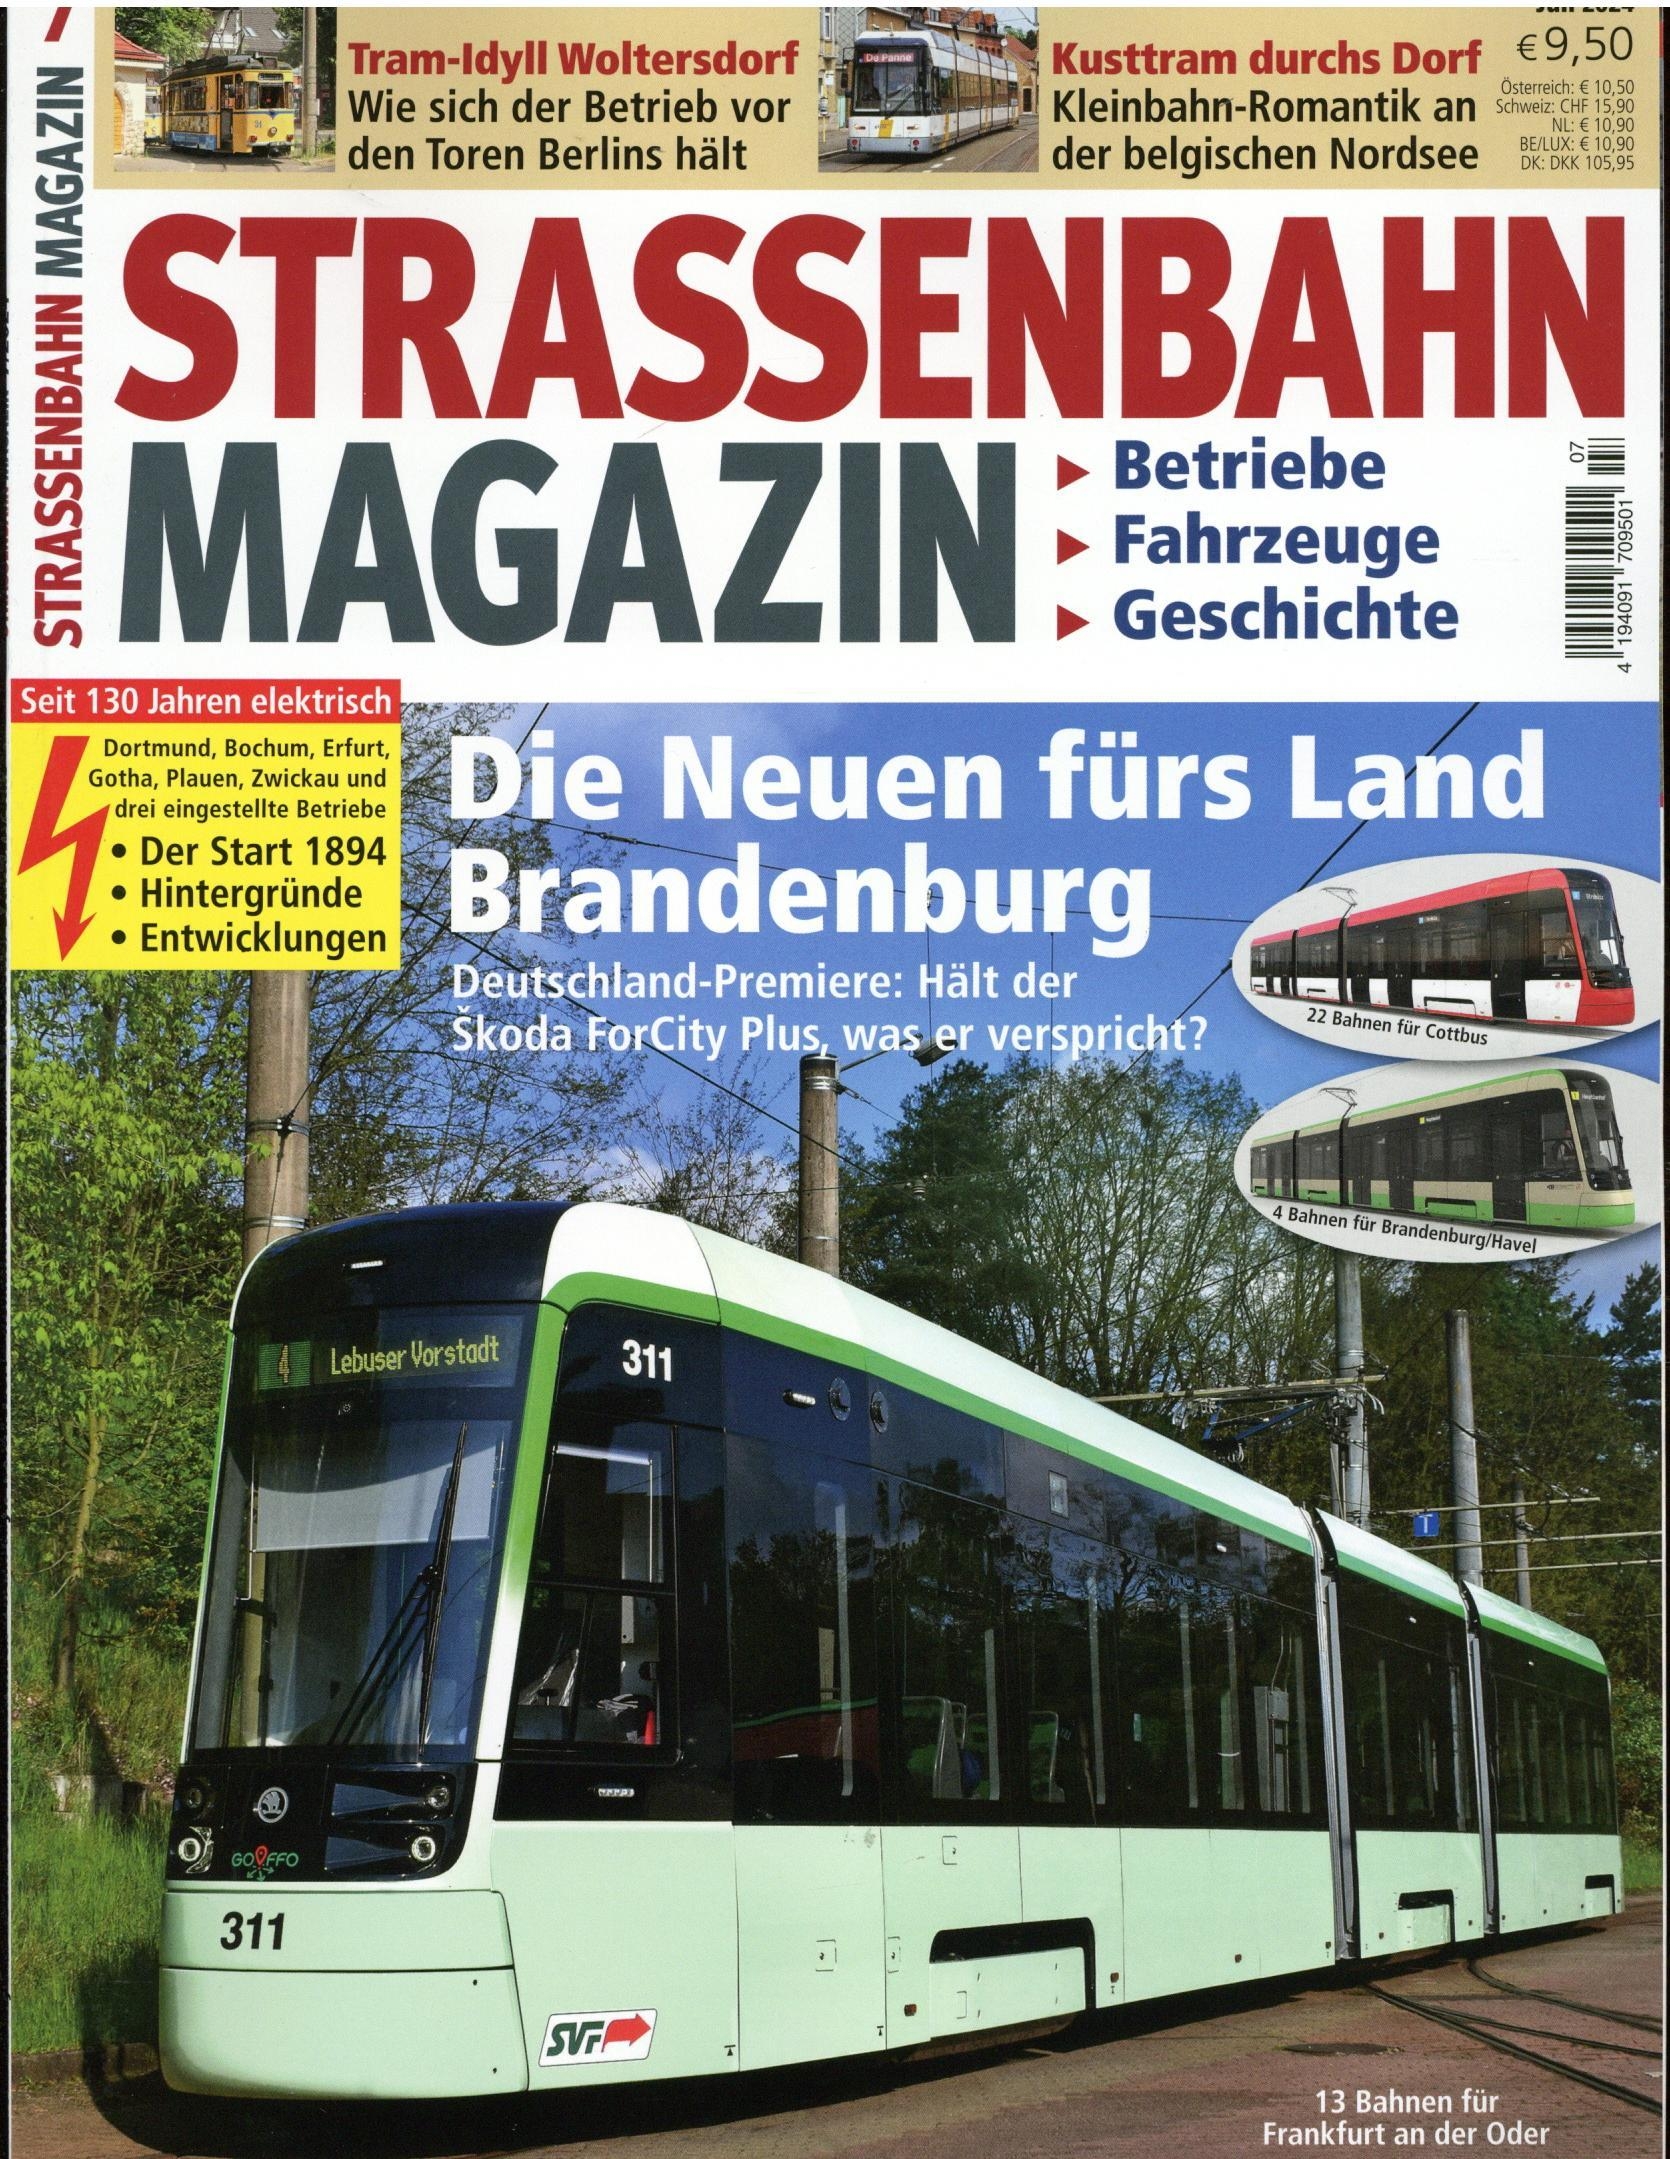 Strassenbahn Magazin